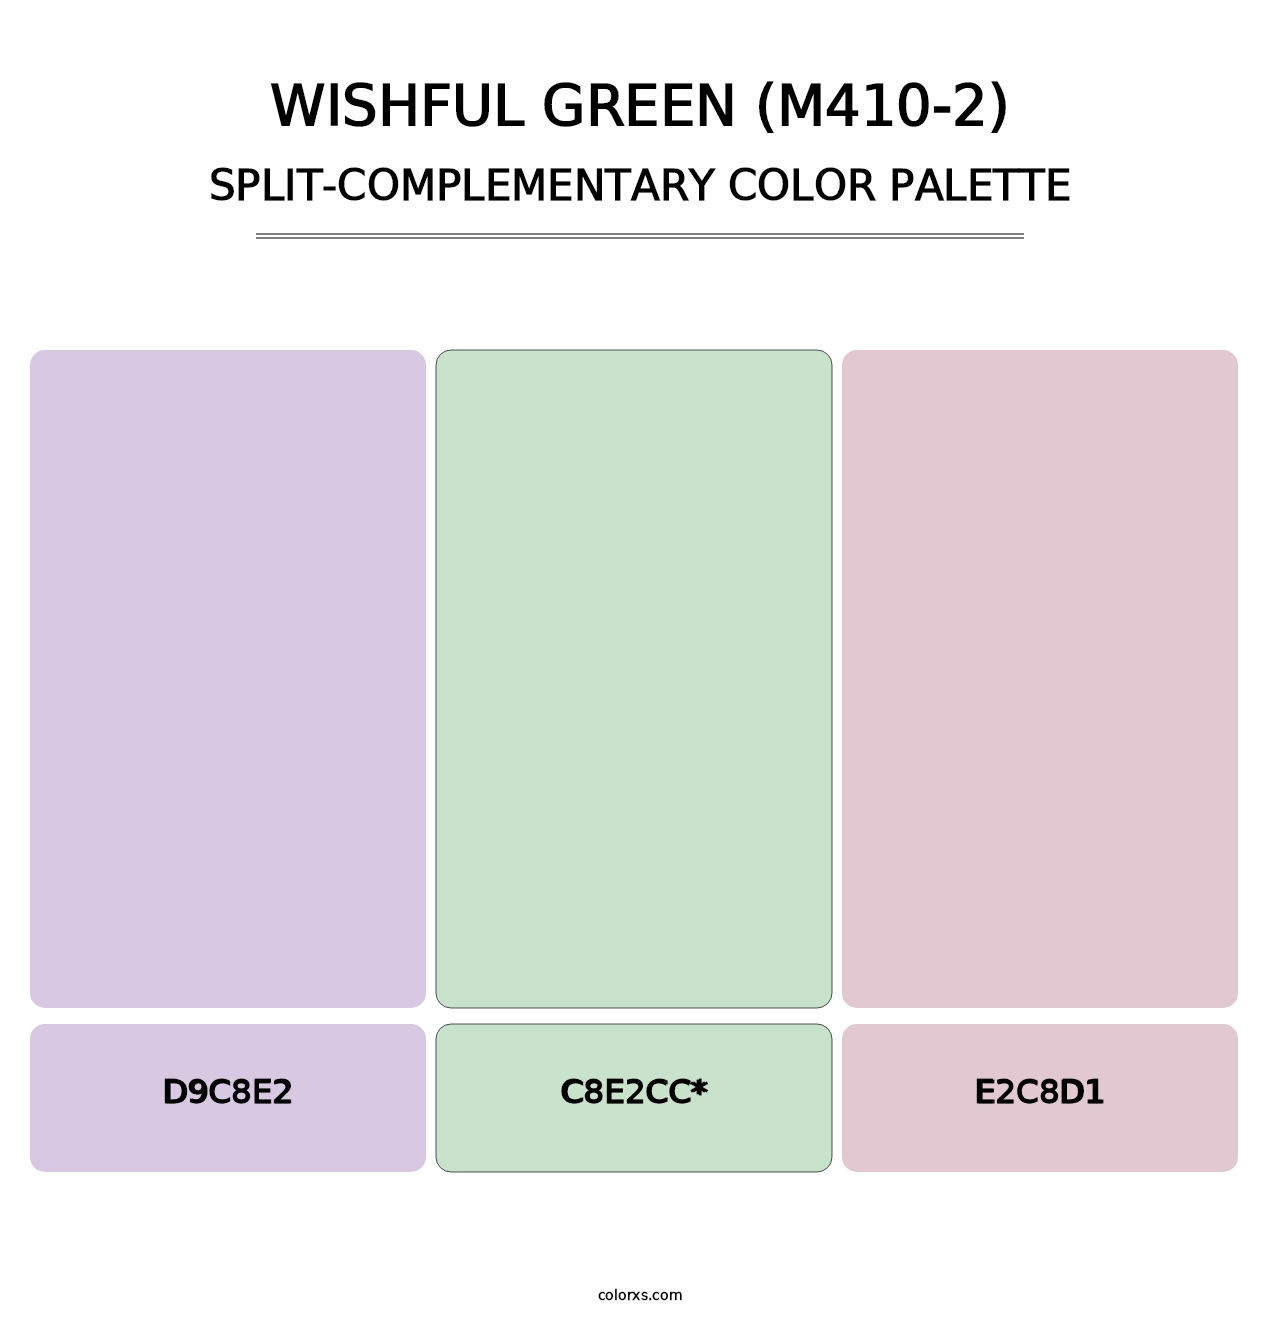 Wishful Green (M410-2) - Split-Complementary Color Palette